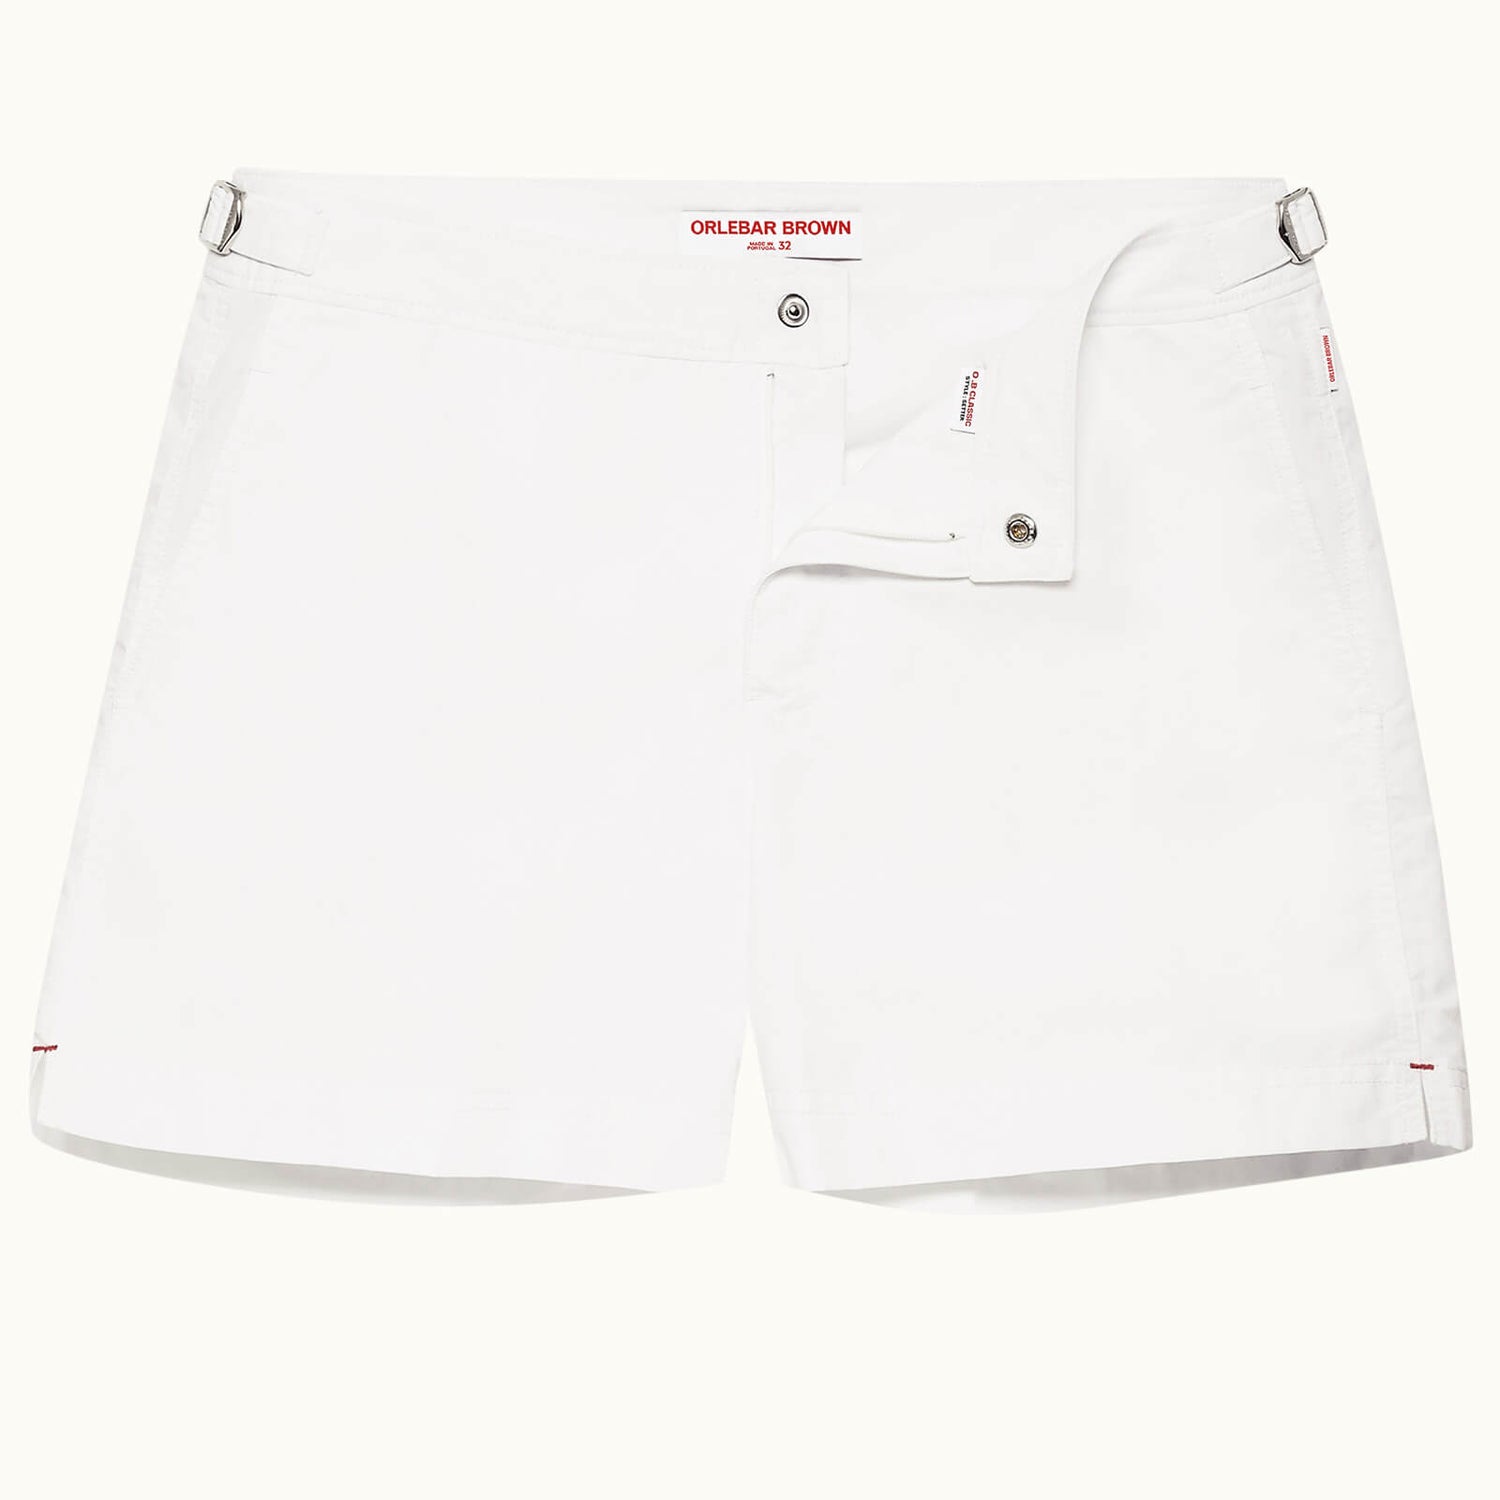 Setter 系列短款游泳短裤- 白色